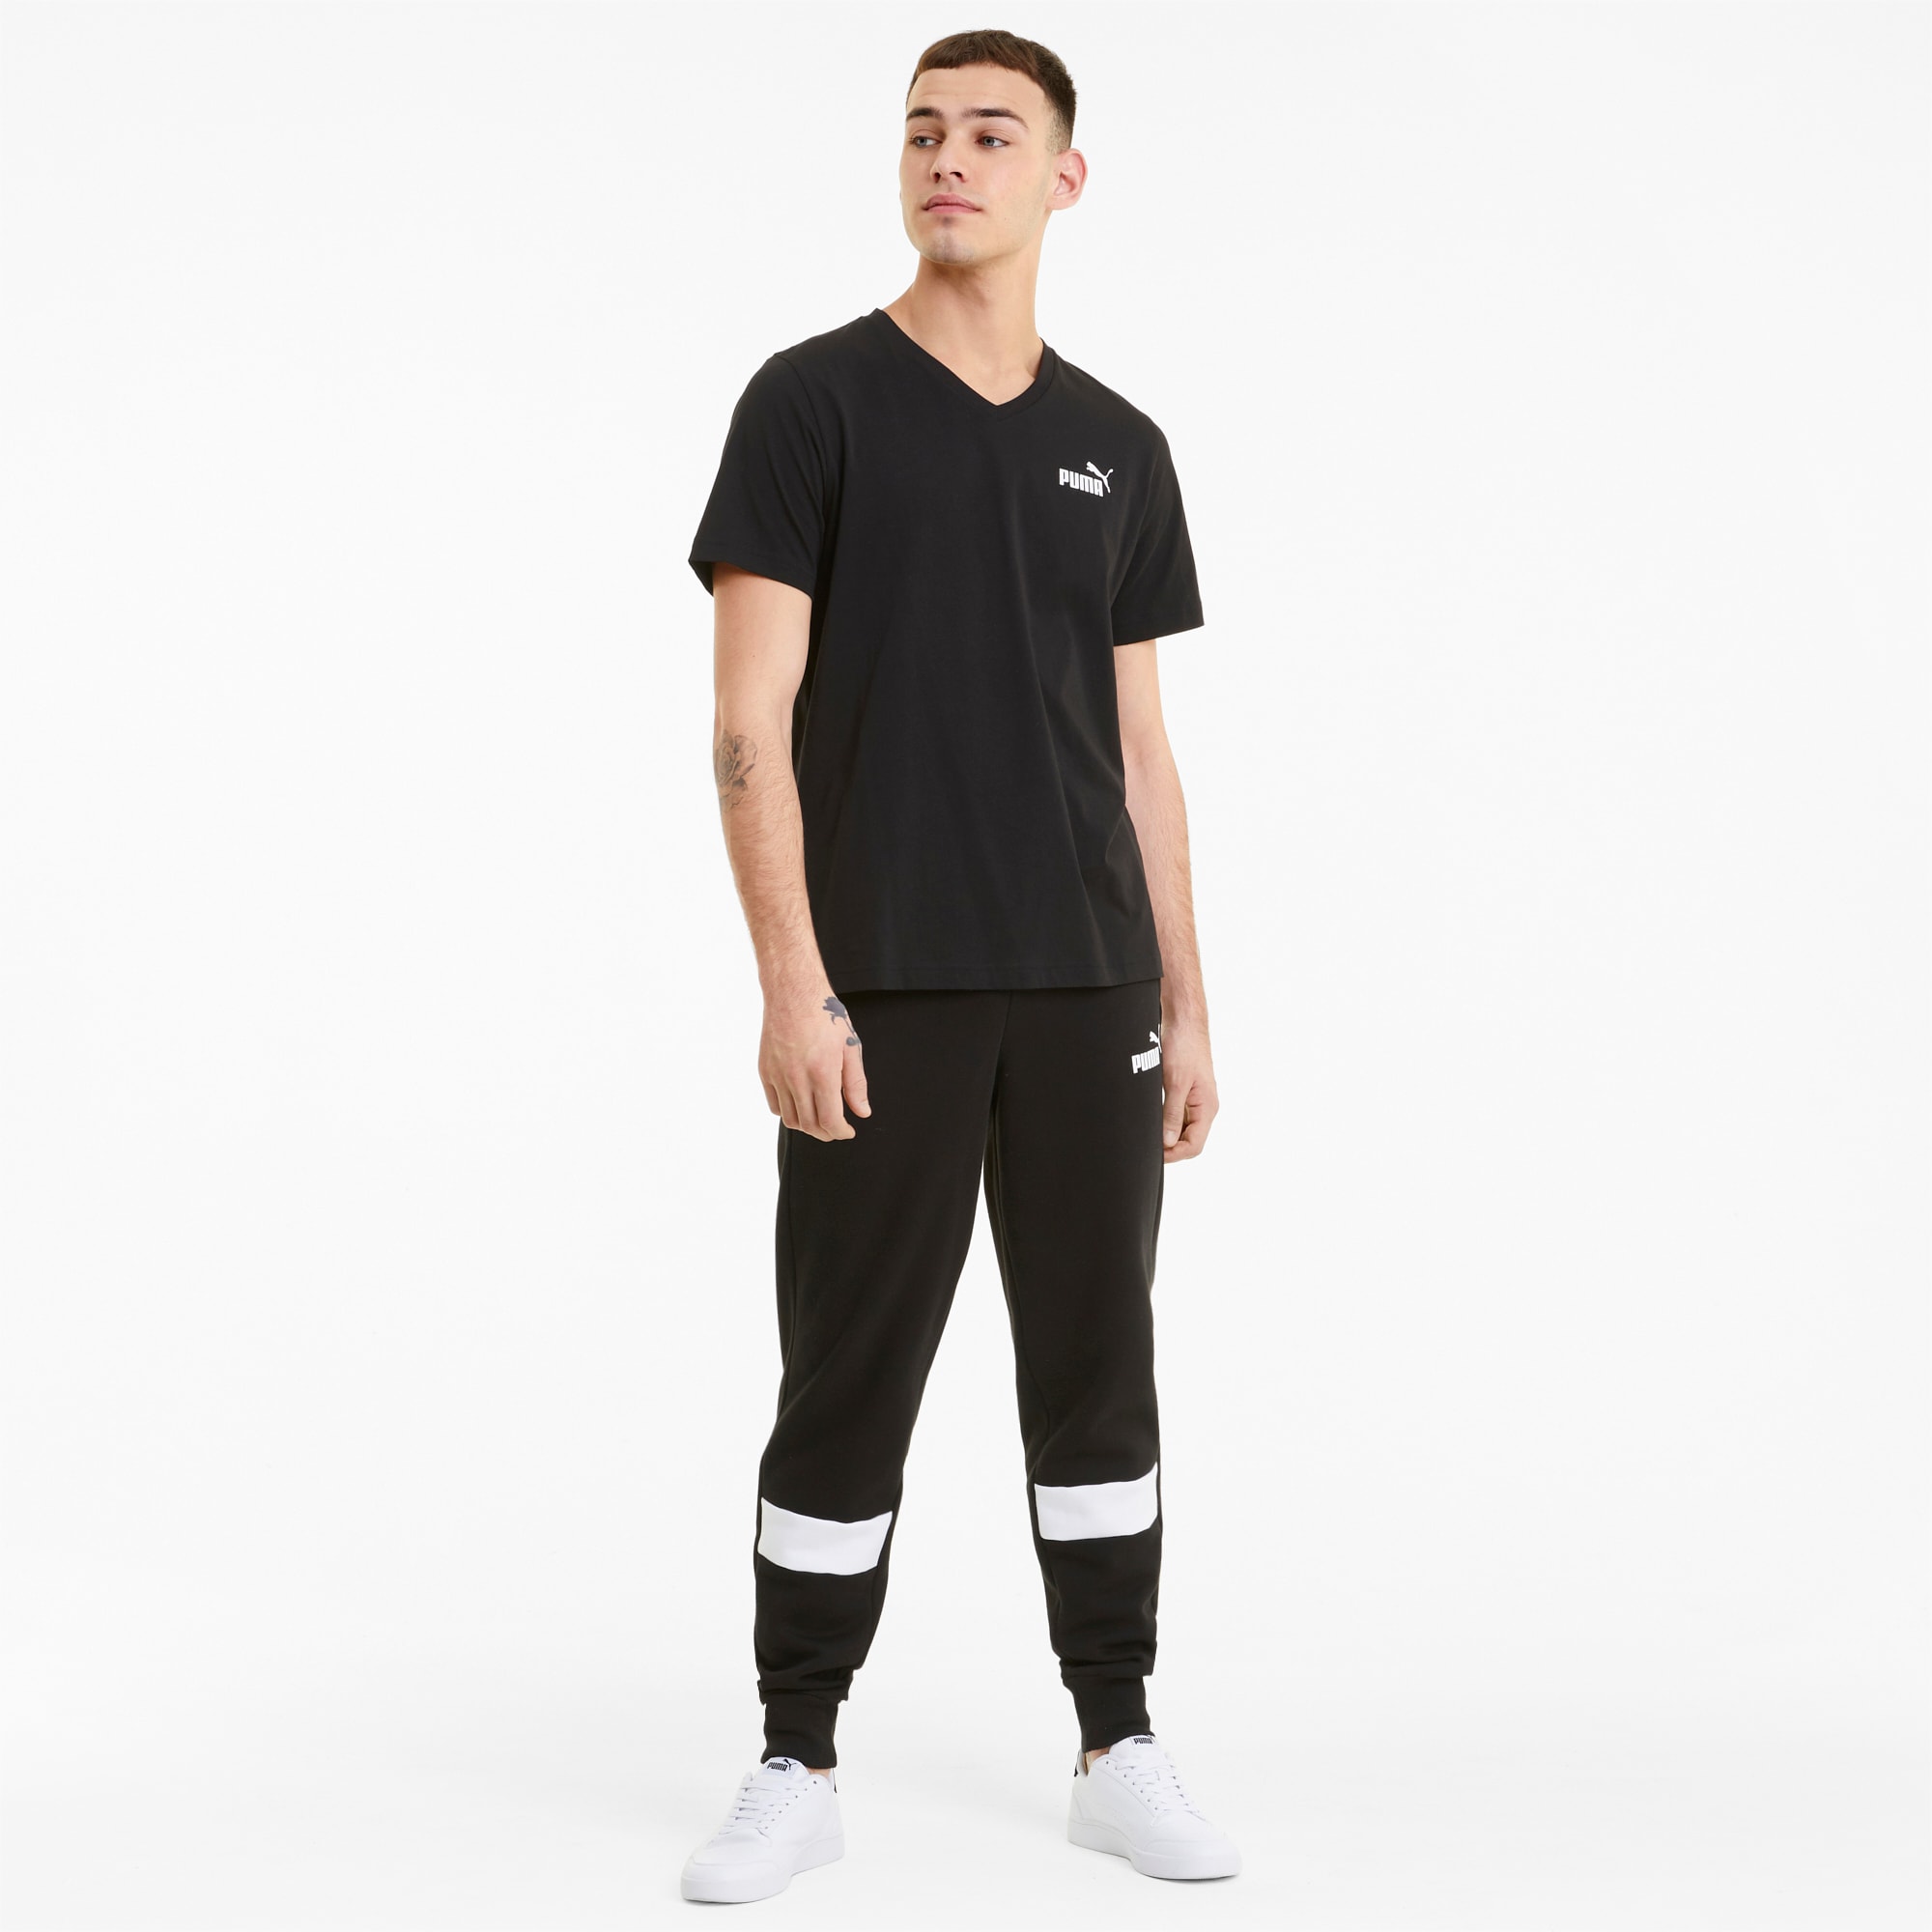 PUMA Essentials V-Neck T-Shirt Men, Black, Size XL, Clothing